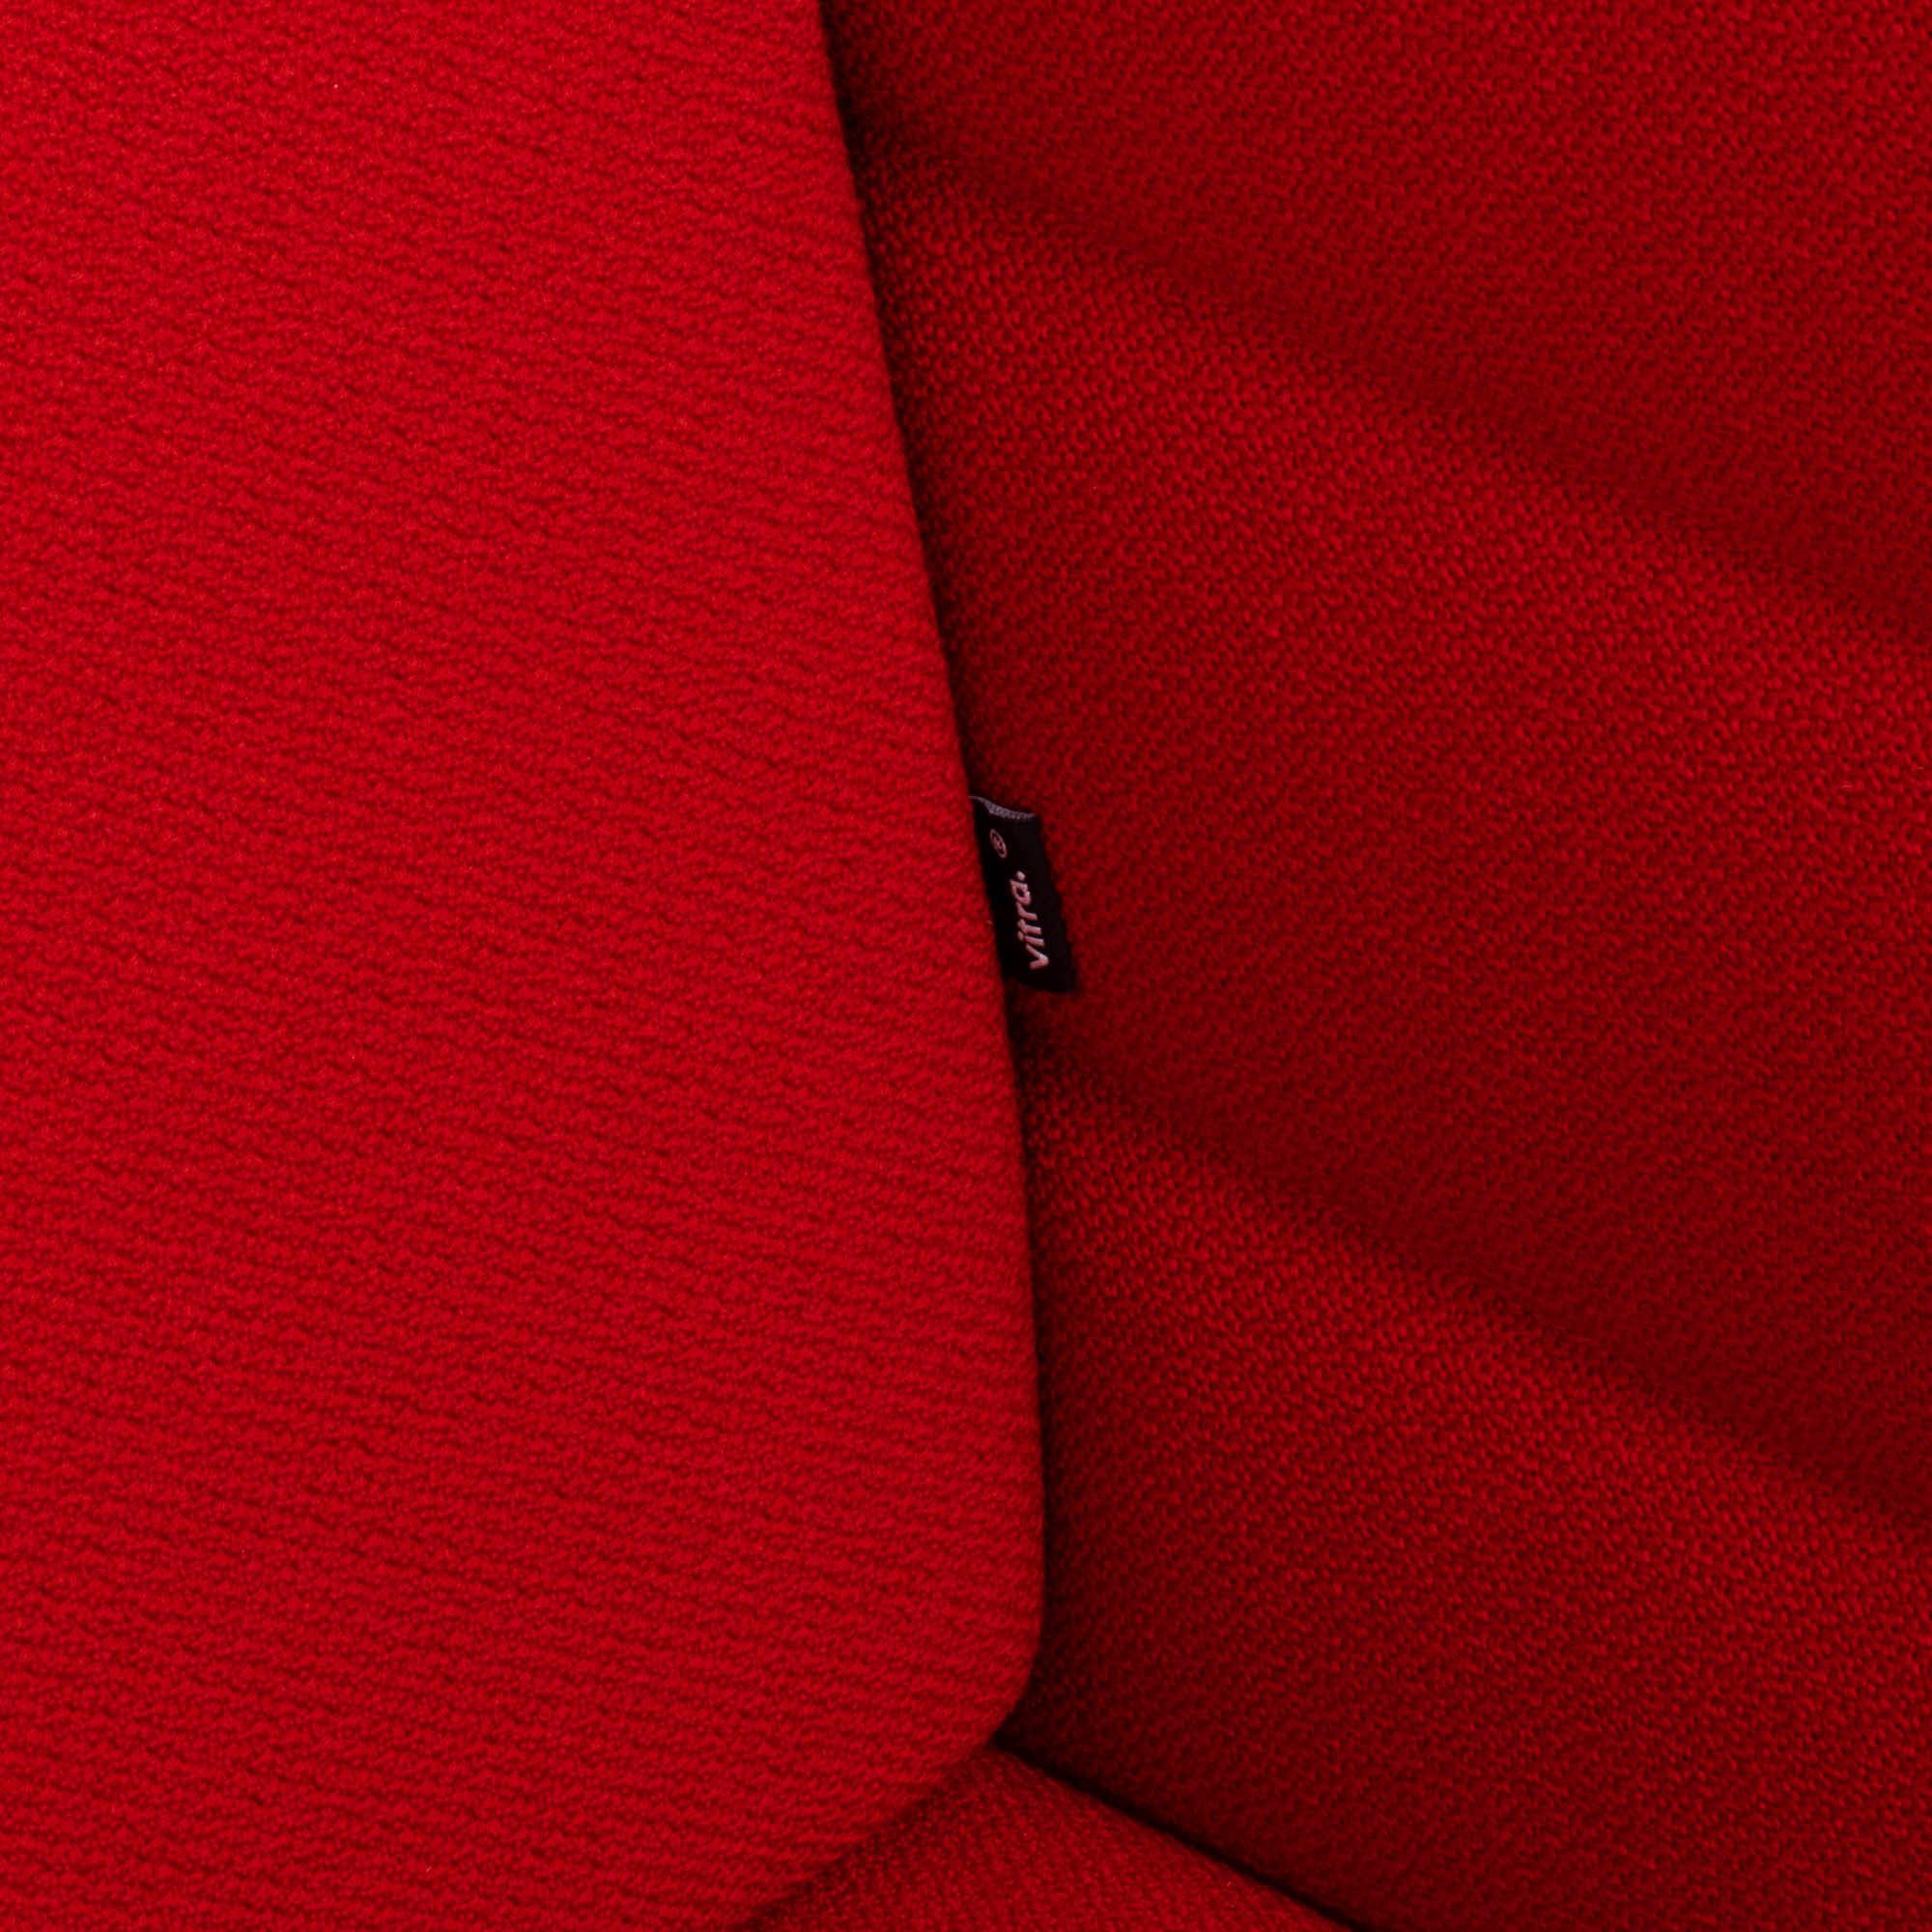 Vitra Alcove Red Loveseat Sofa by Ronan & Erwan Bouroullec 6